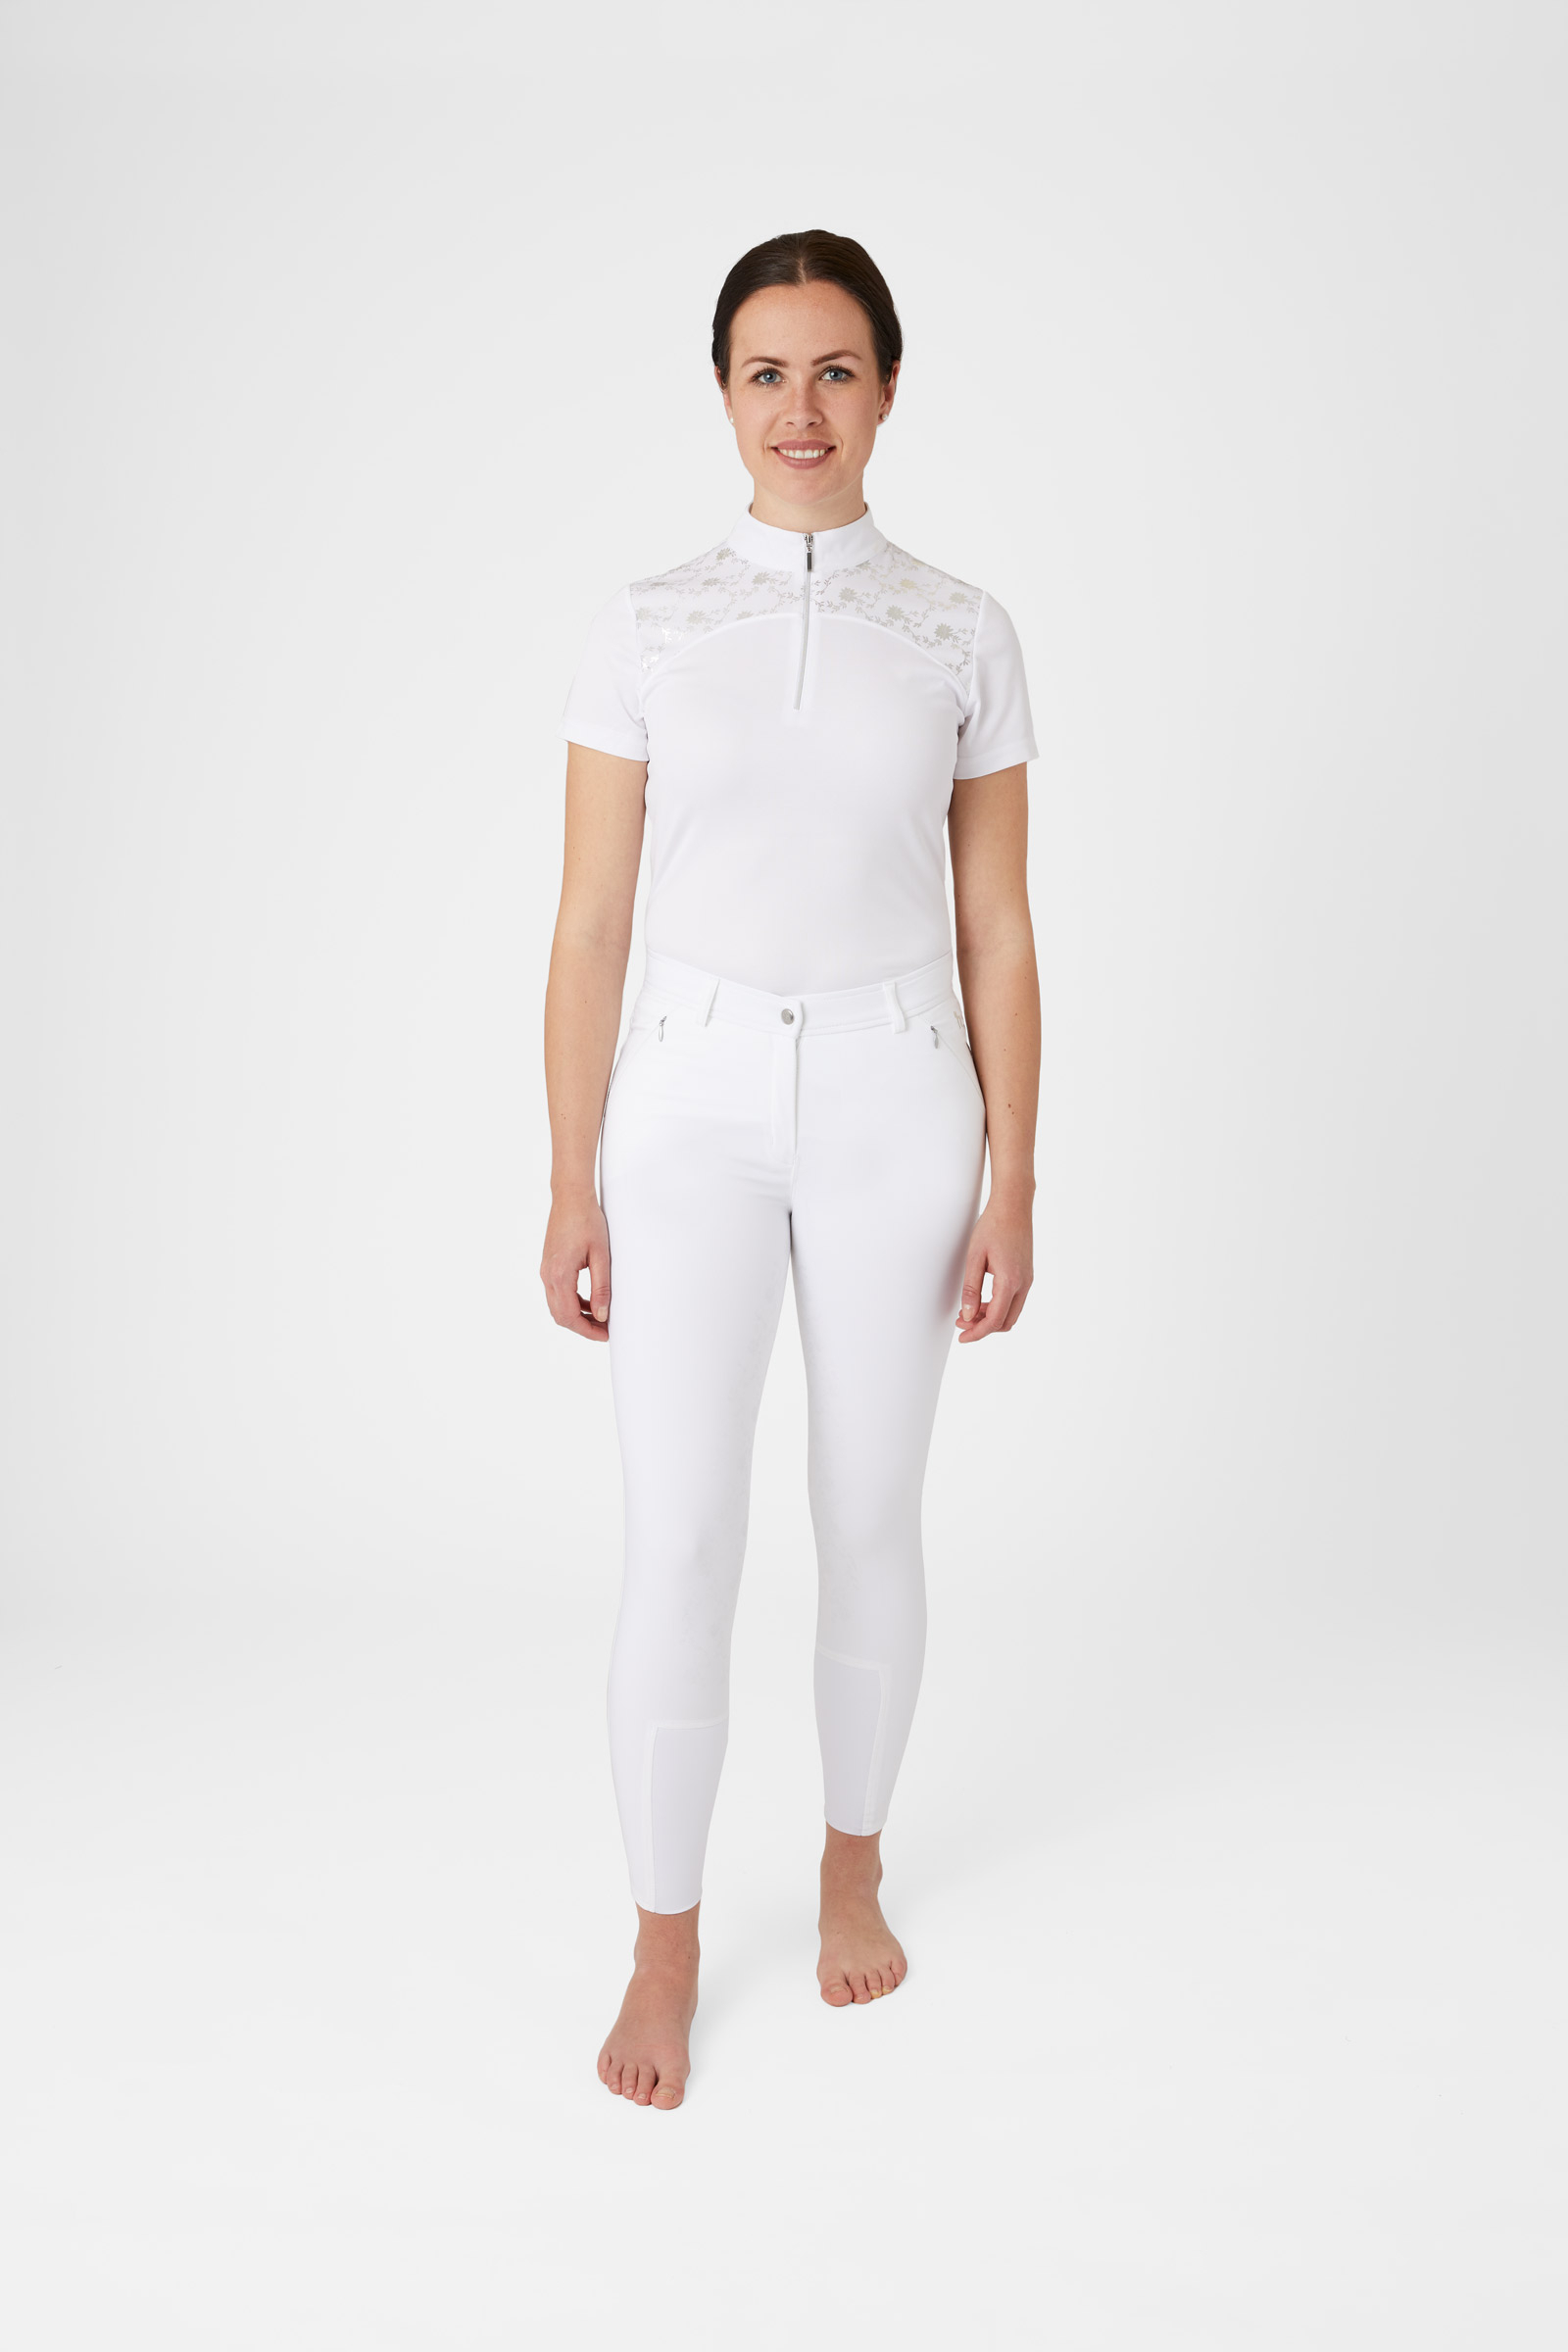 Horze Kaitlin Womens Full Seat Breeches - White – Extreme Tack